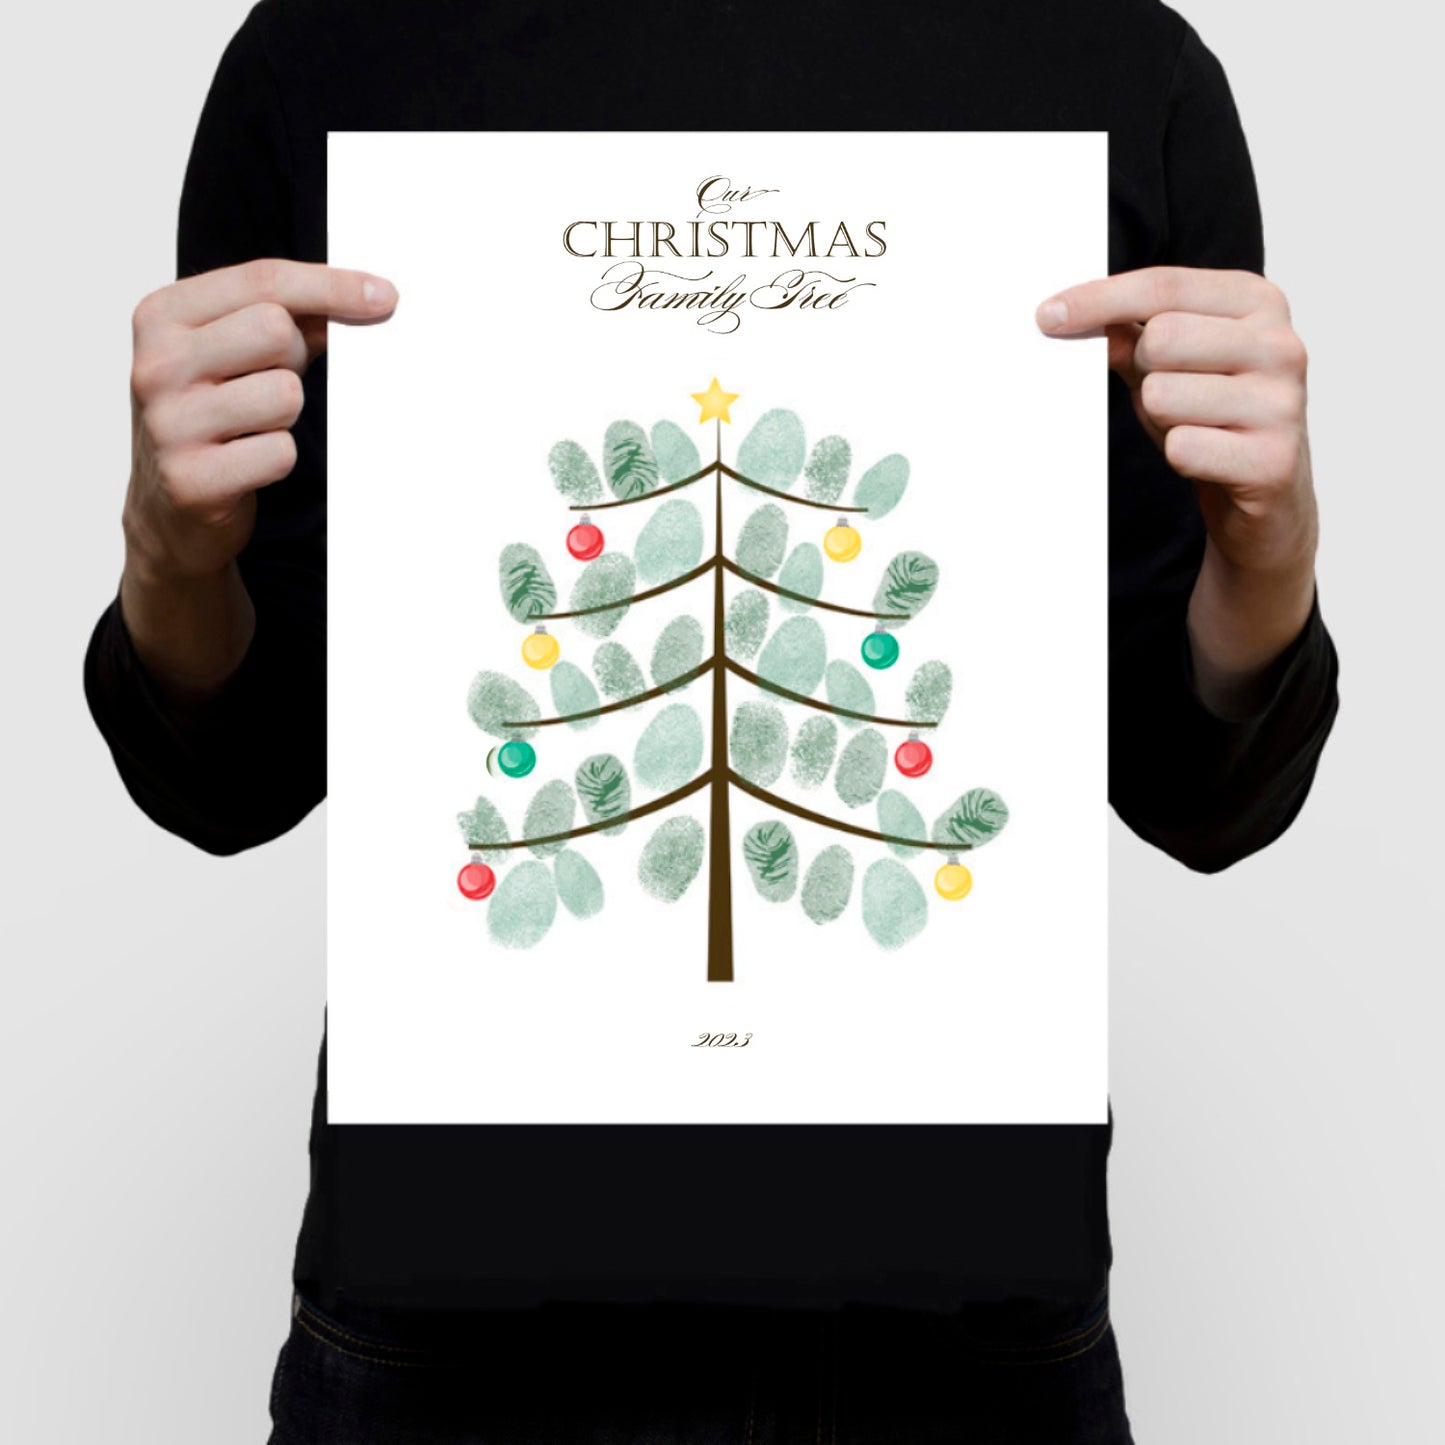 Fingerprint Christmas tree guest book print